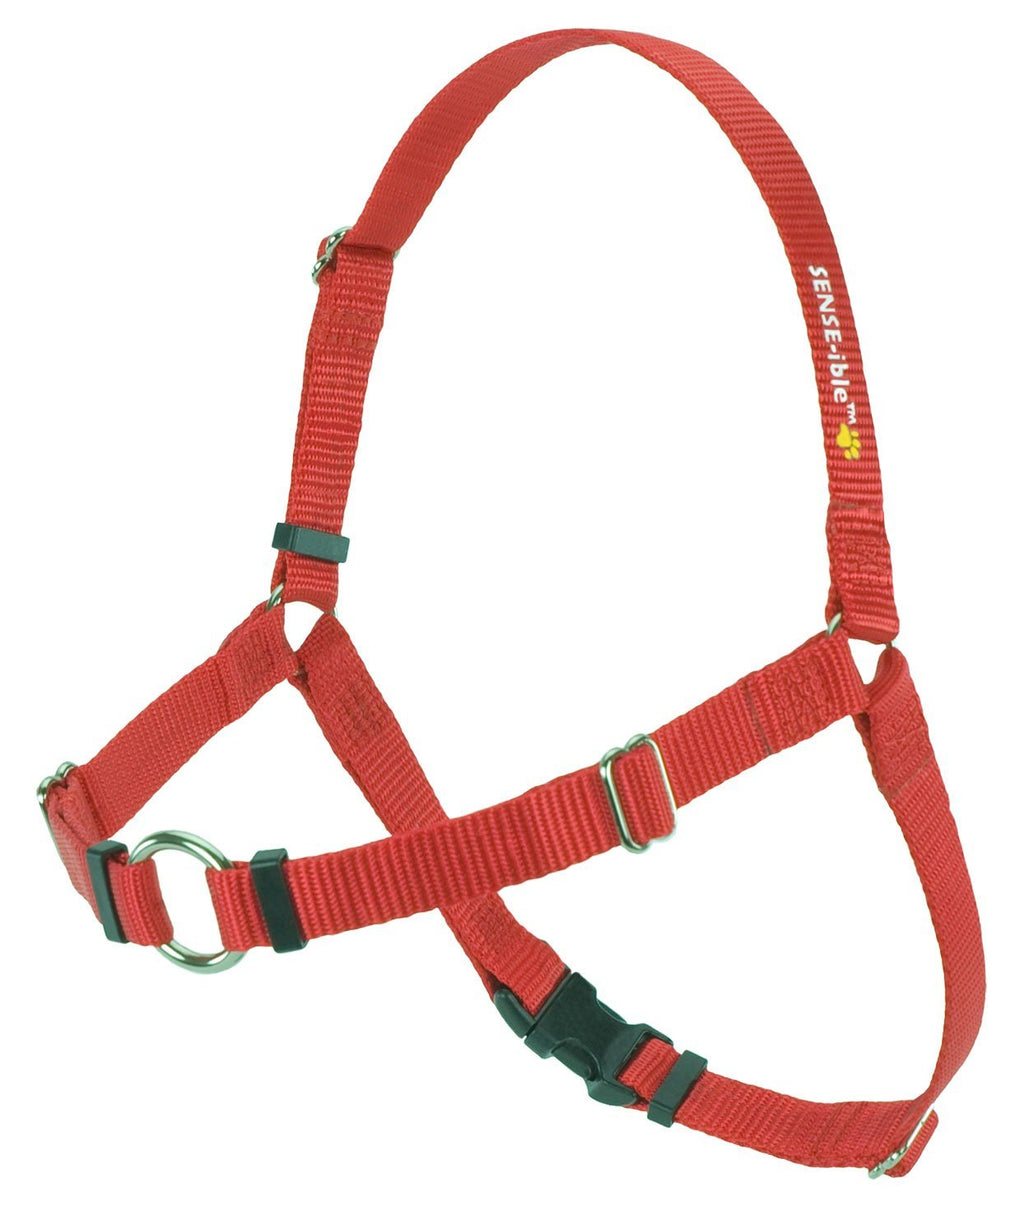 [Australia] - SENSE-ible No Pull Dog Harness - Red - Medium/Large Narrow (3/4") 